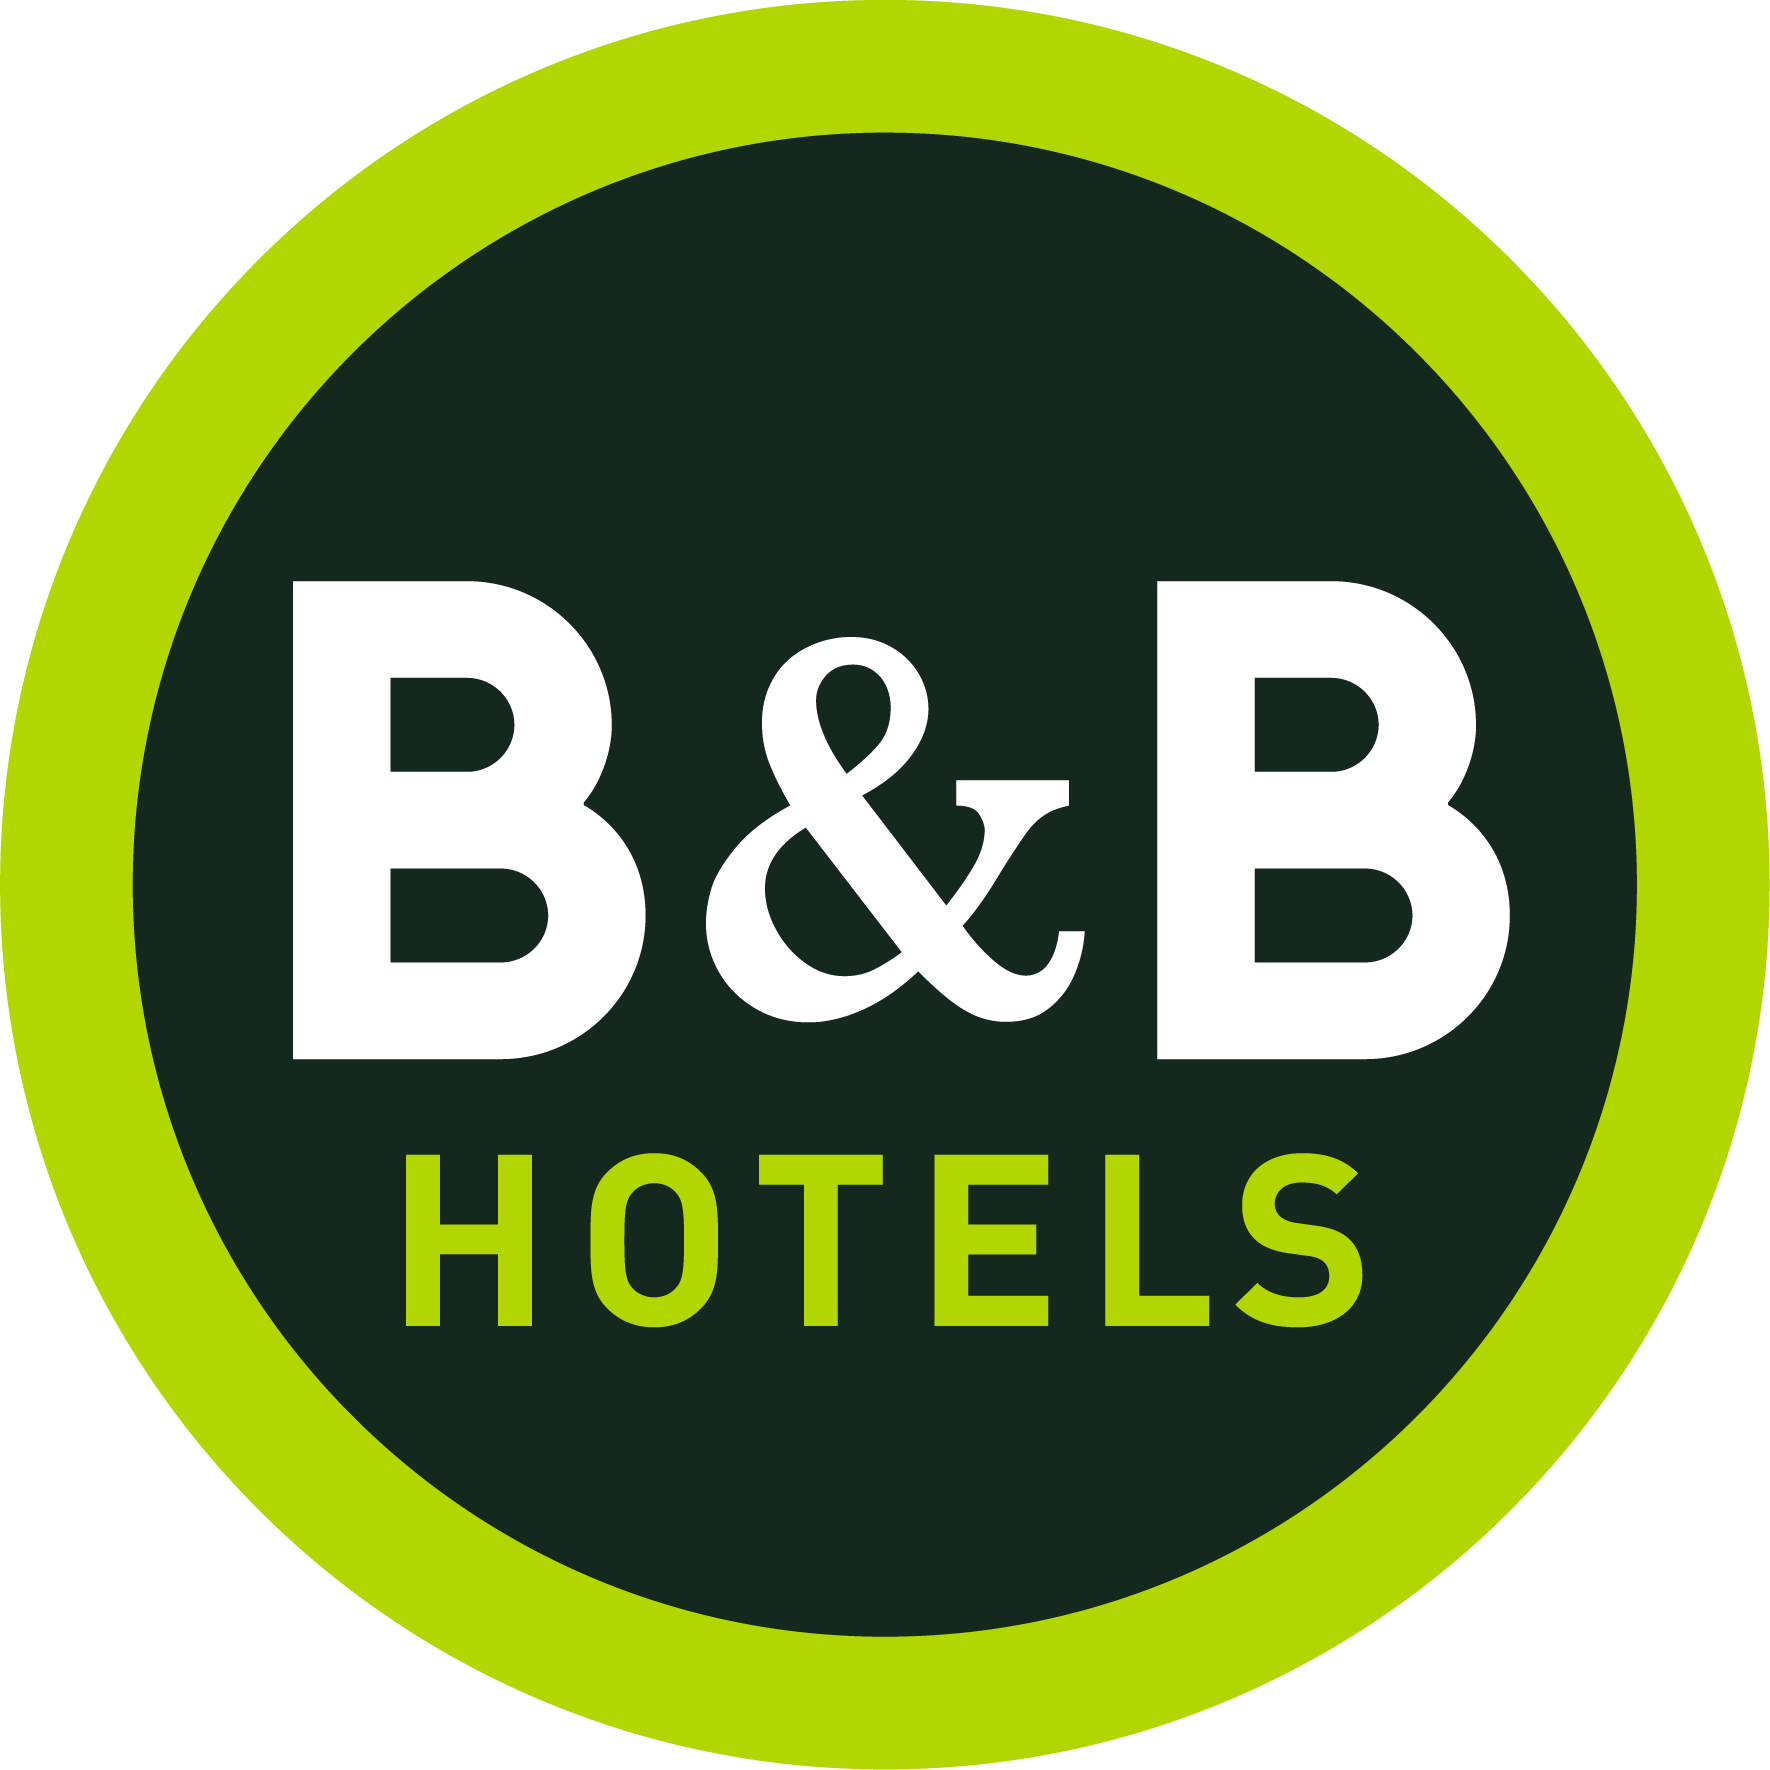 B&B HOTELS Germany GmbH - München